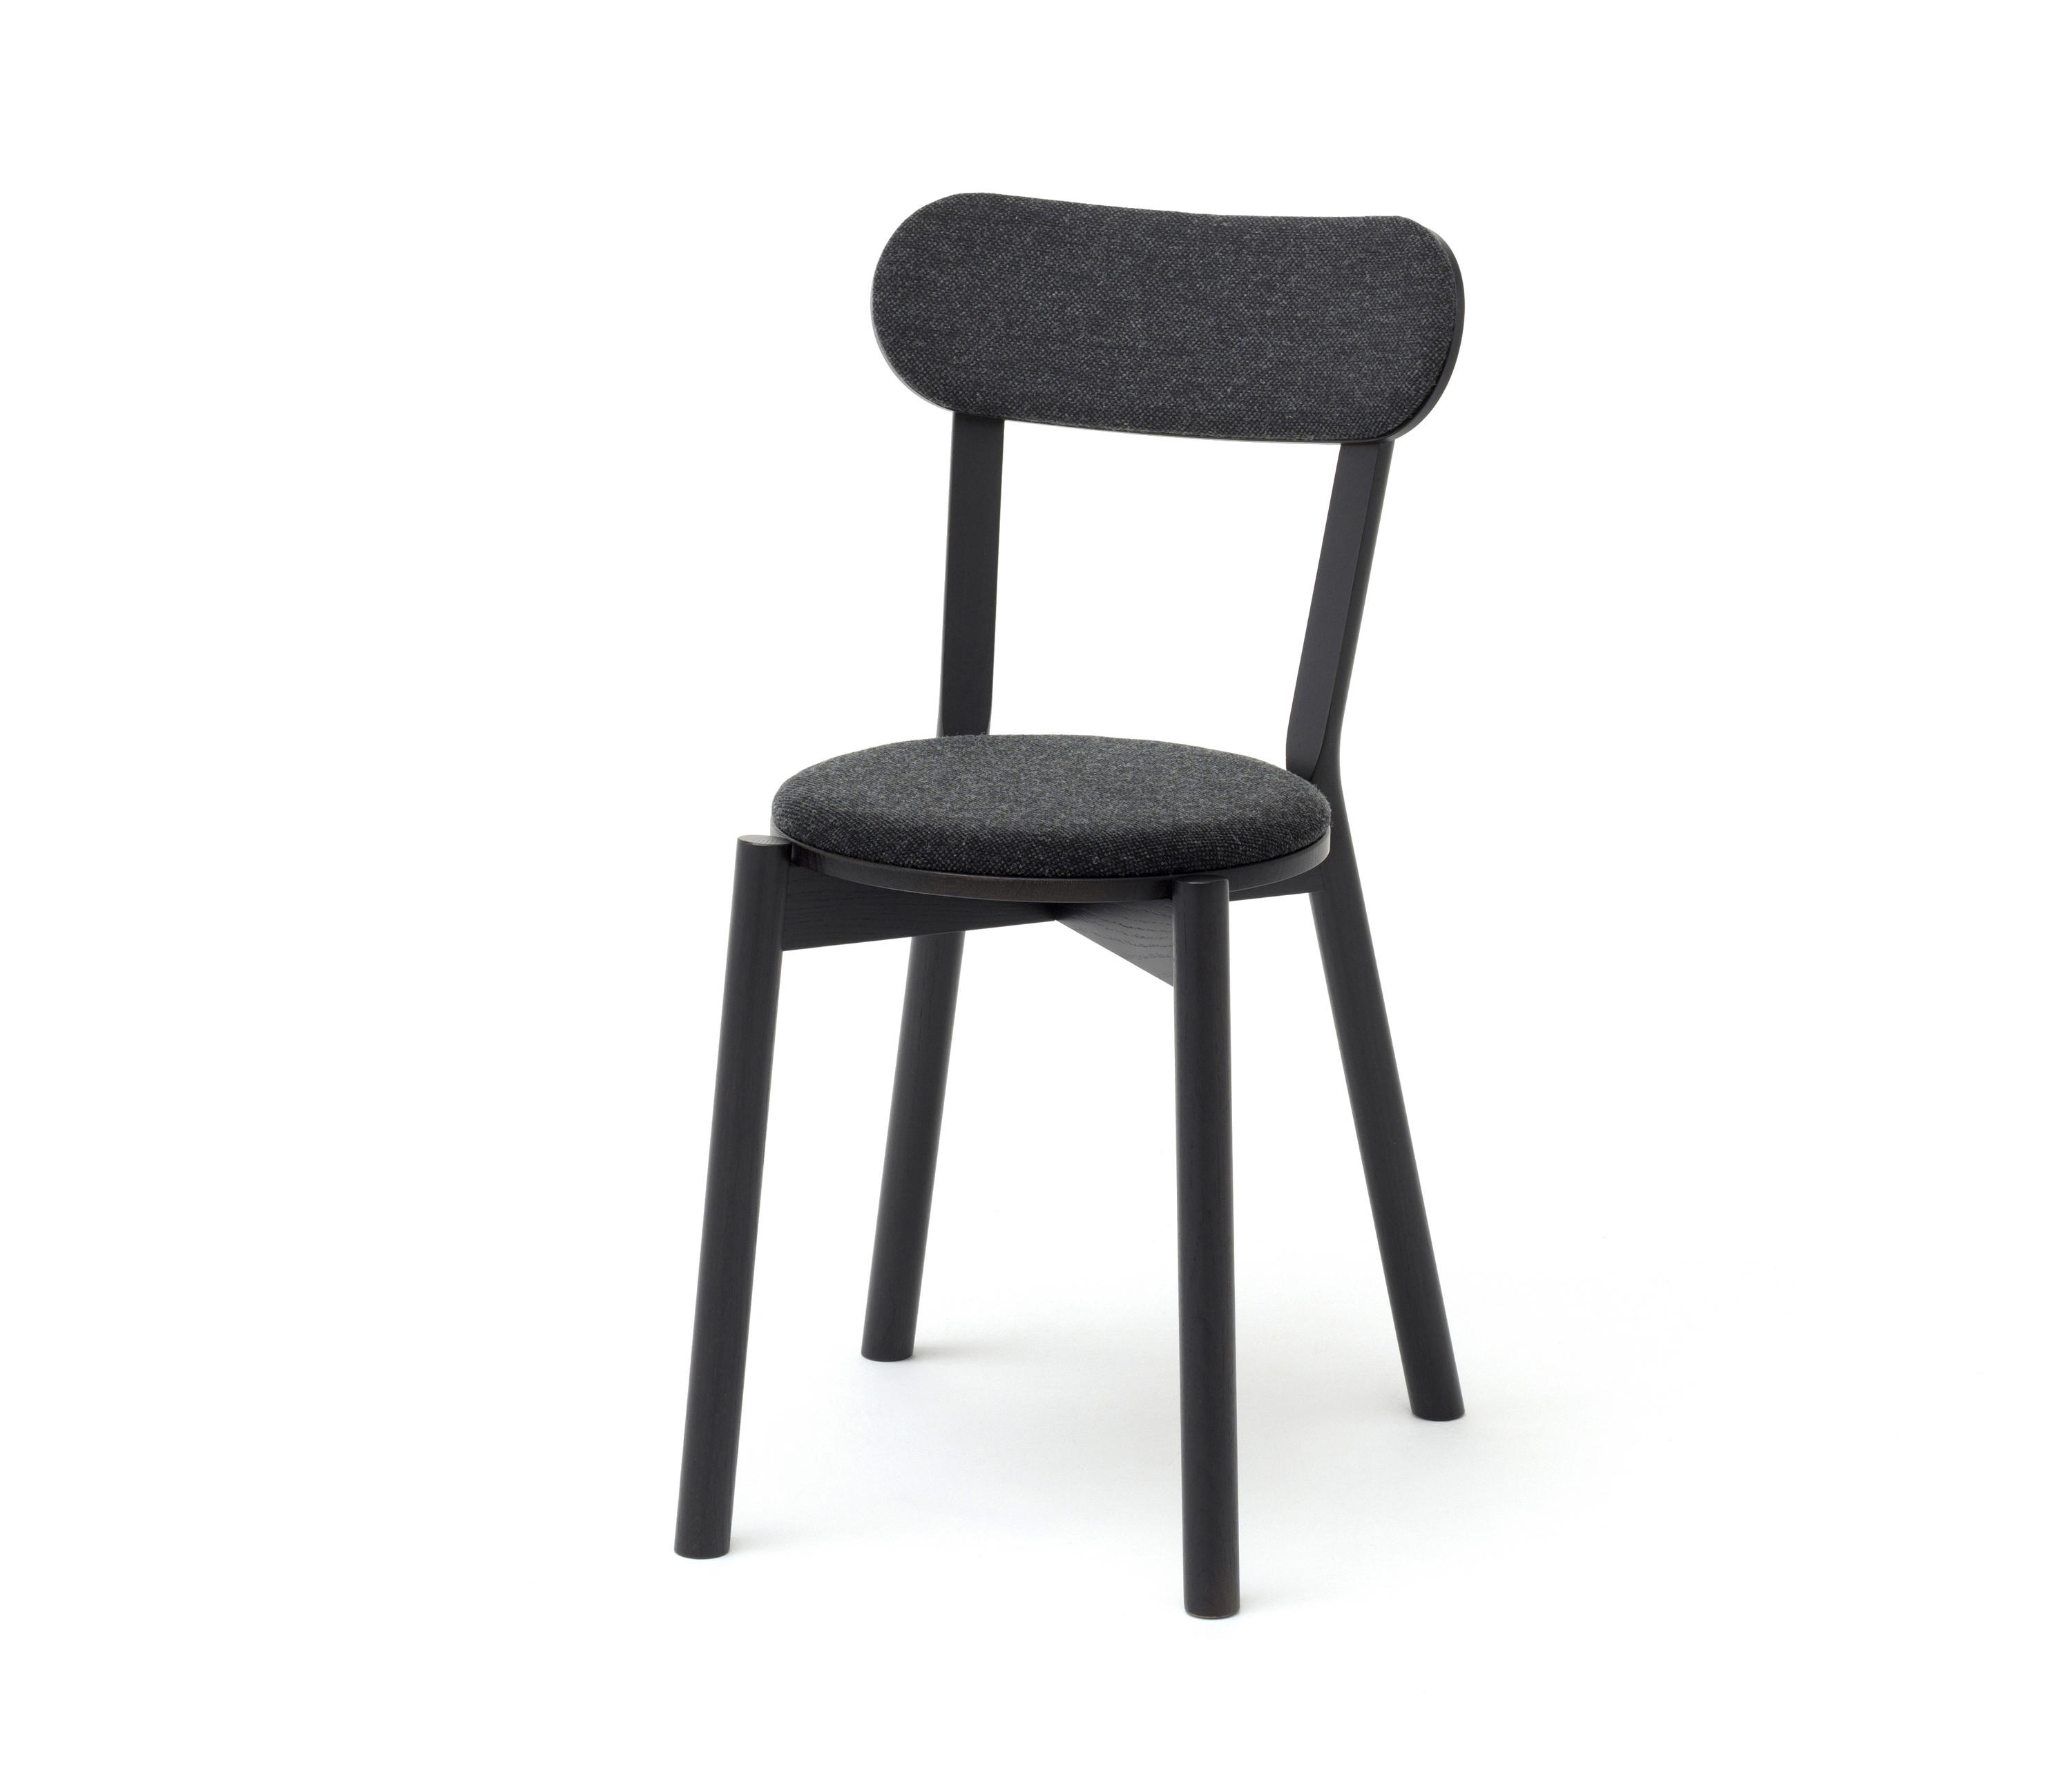 Castor Chair Pad & designer furniture | Architonic